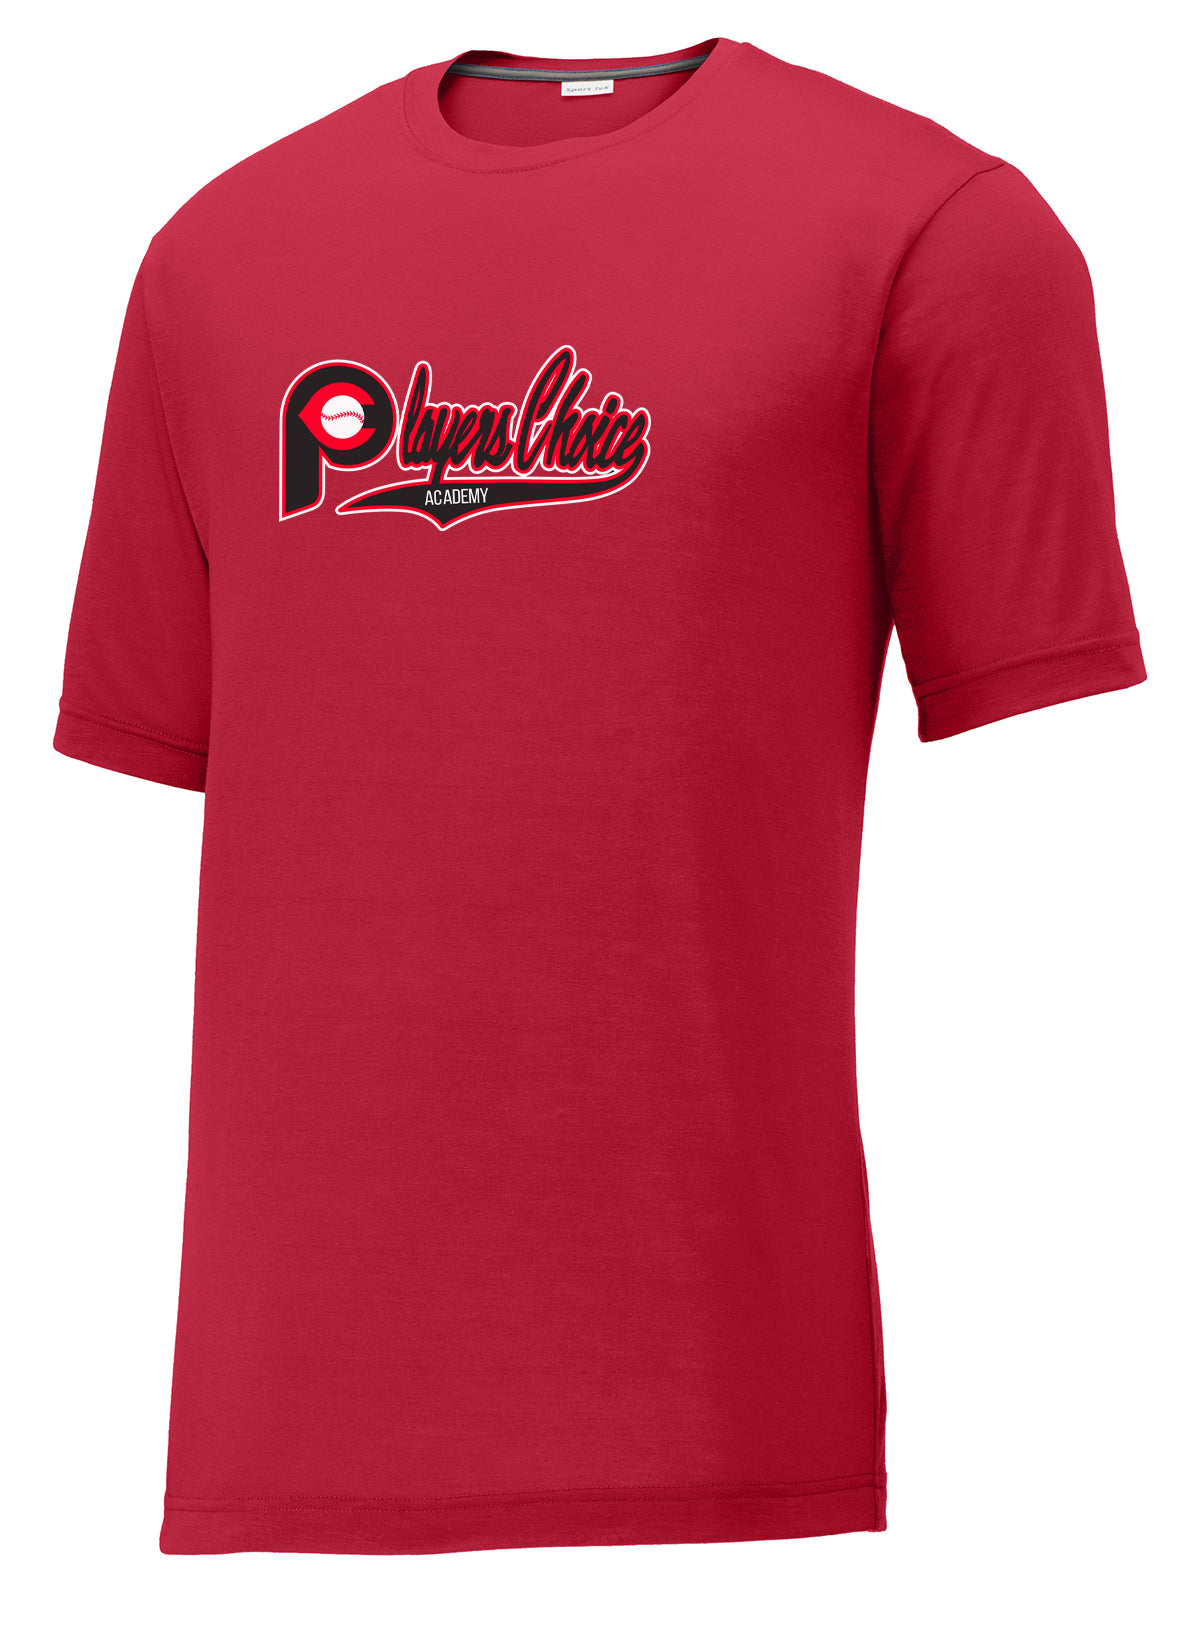 Player's Choice Academy Baseball CottonTouch Performance T-Shirt